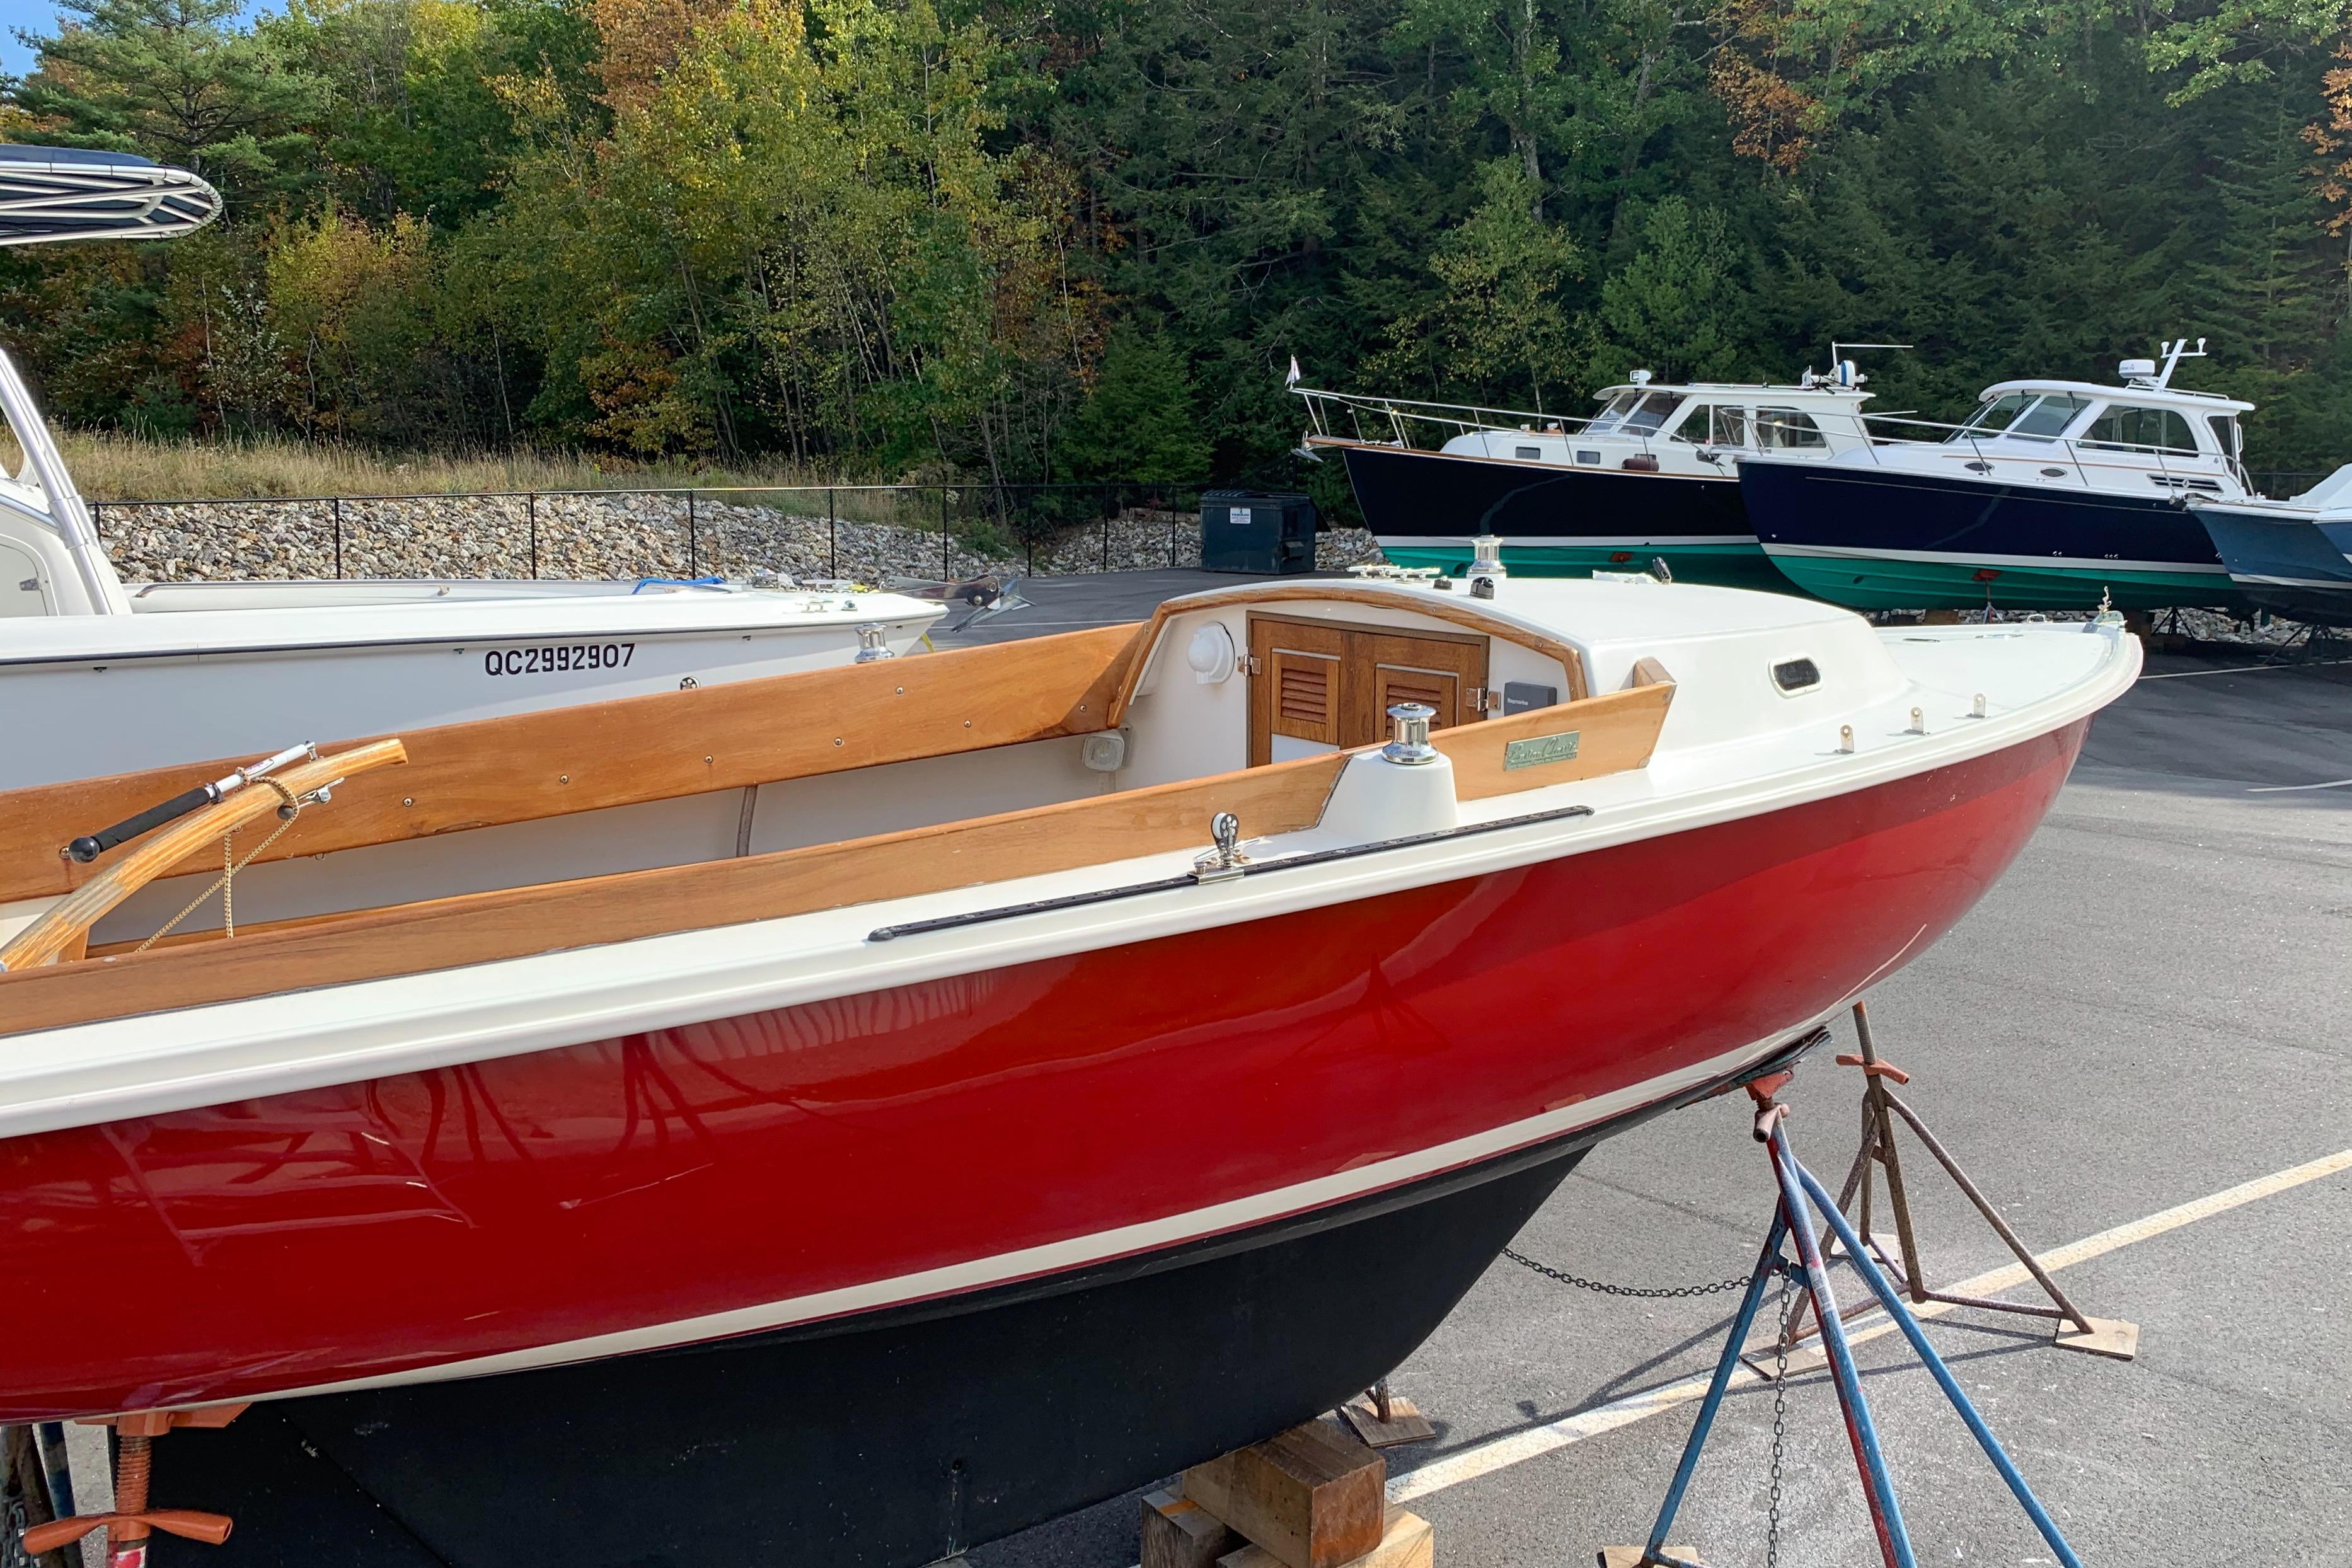 ensign sailboat for sale michigan